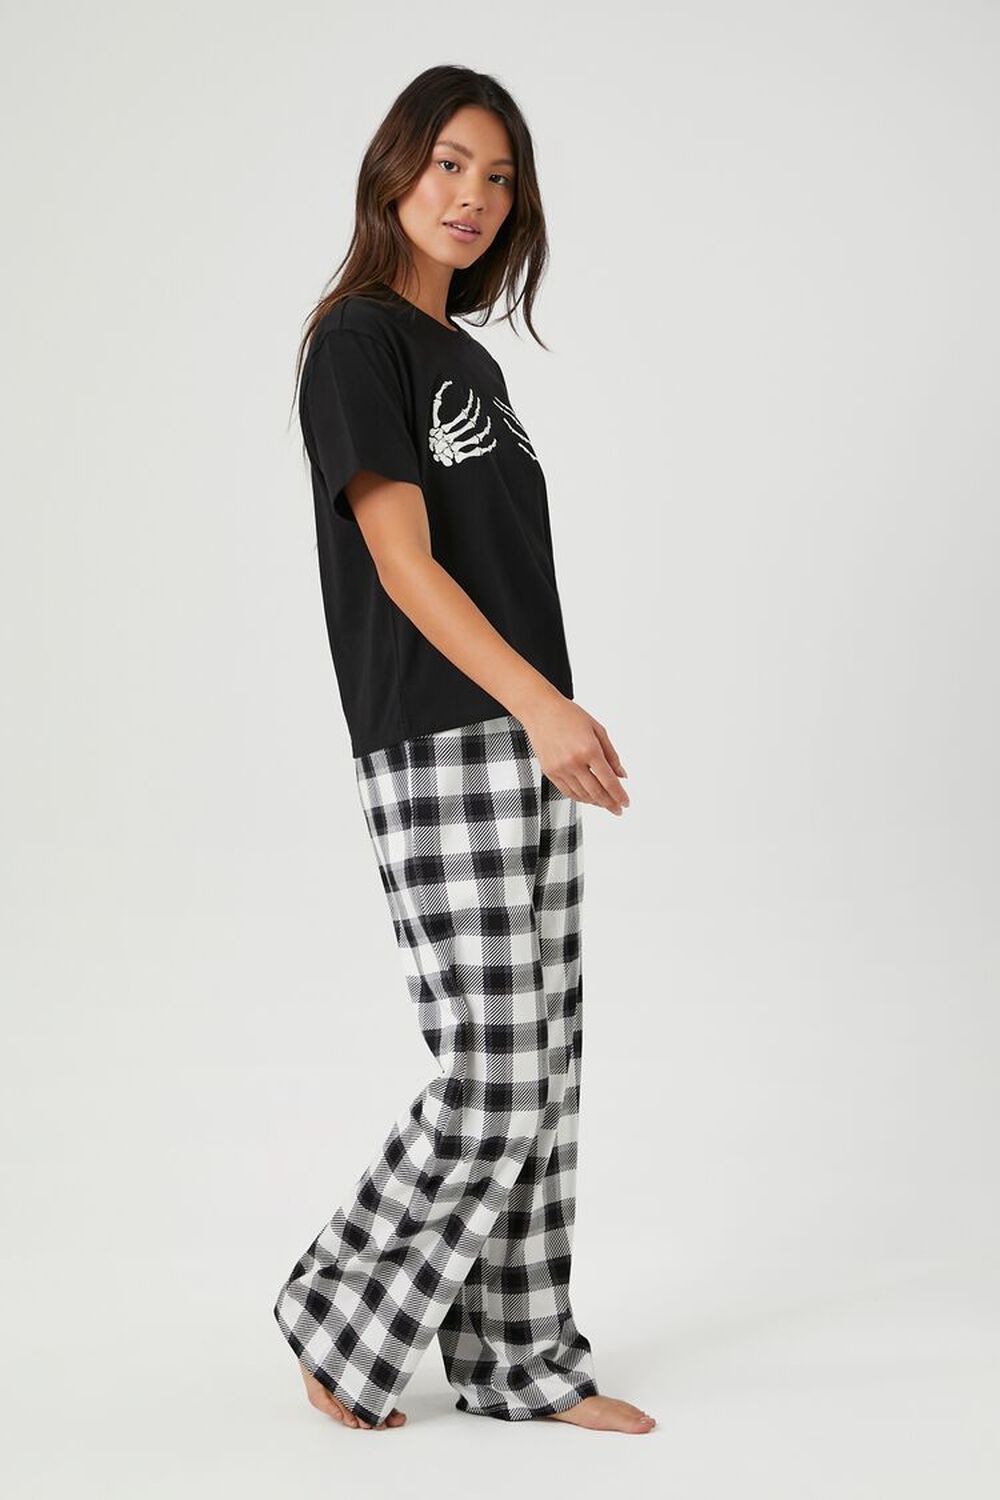 Forever 21 Women's Plaid Pants Pajama Set